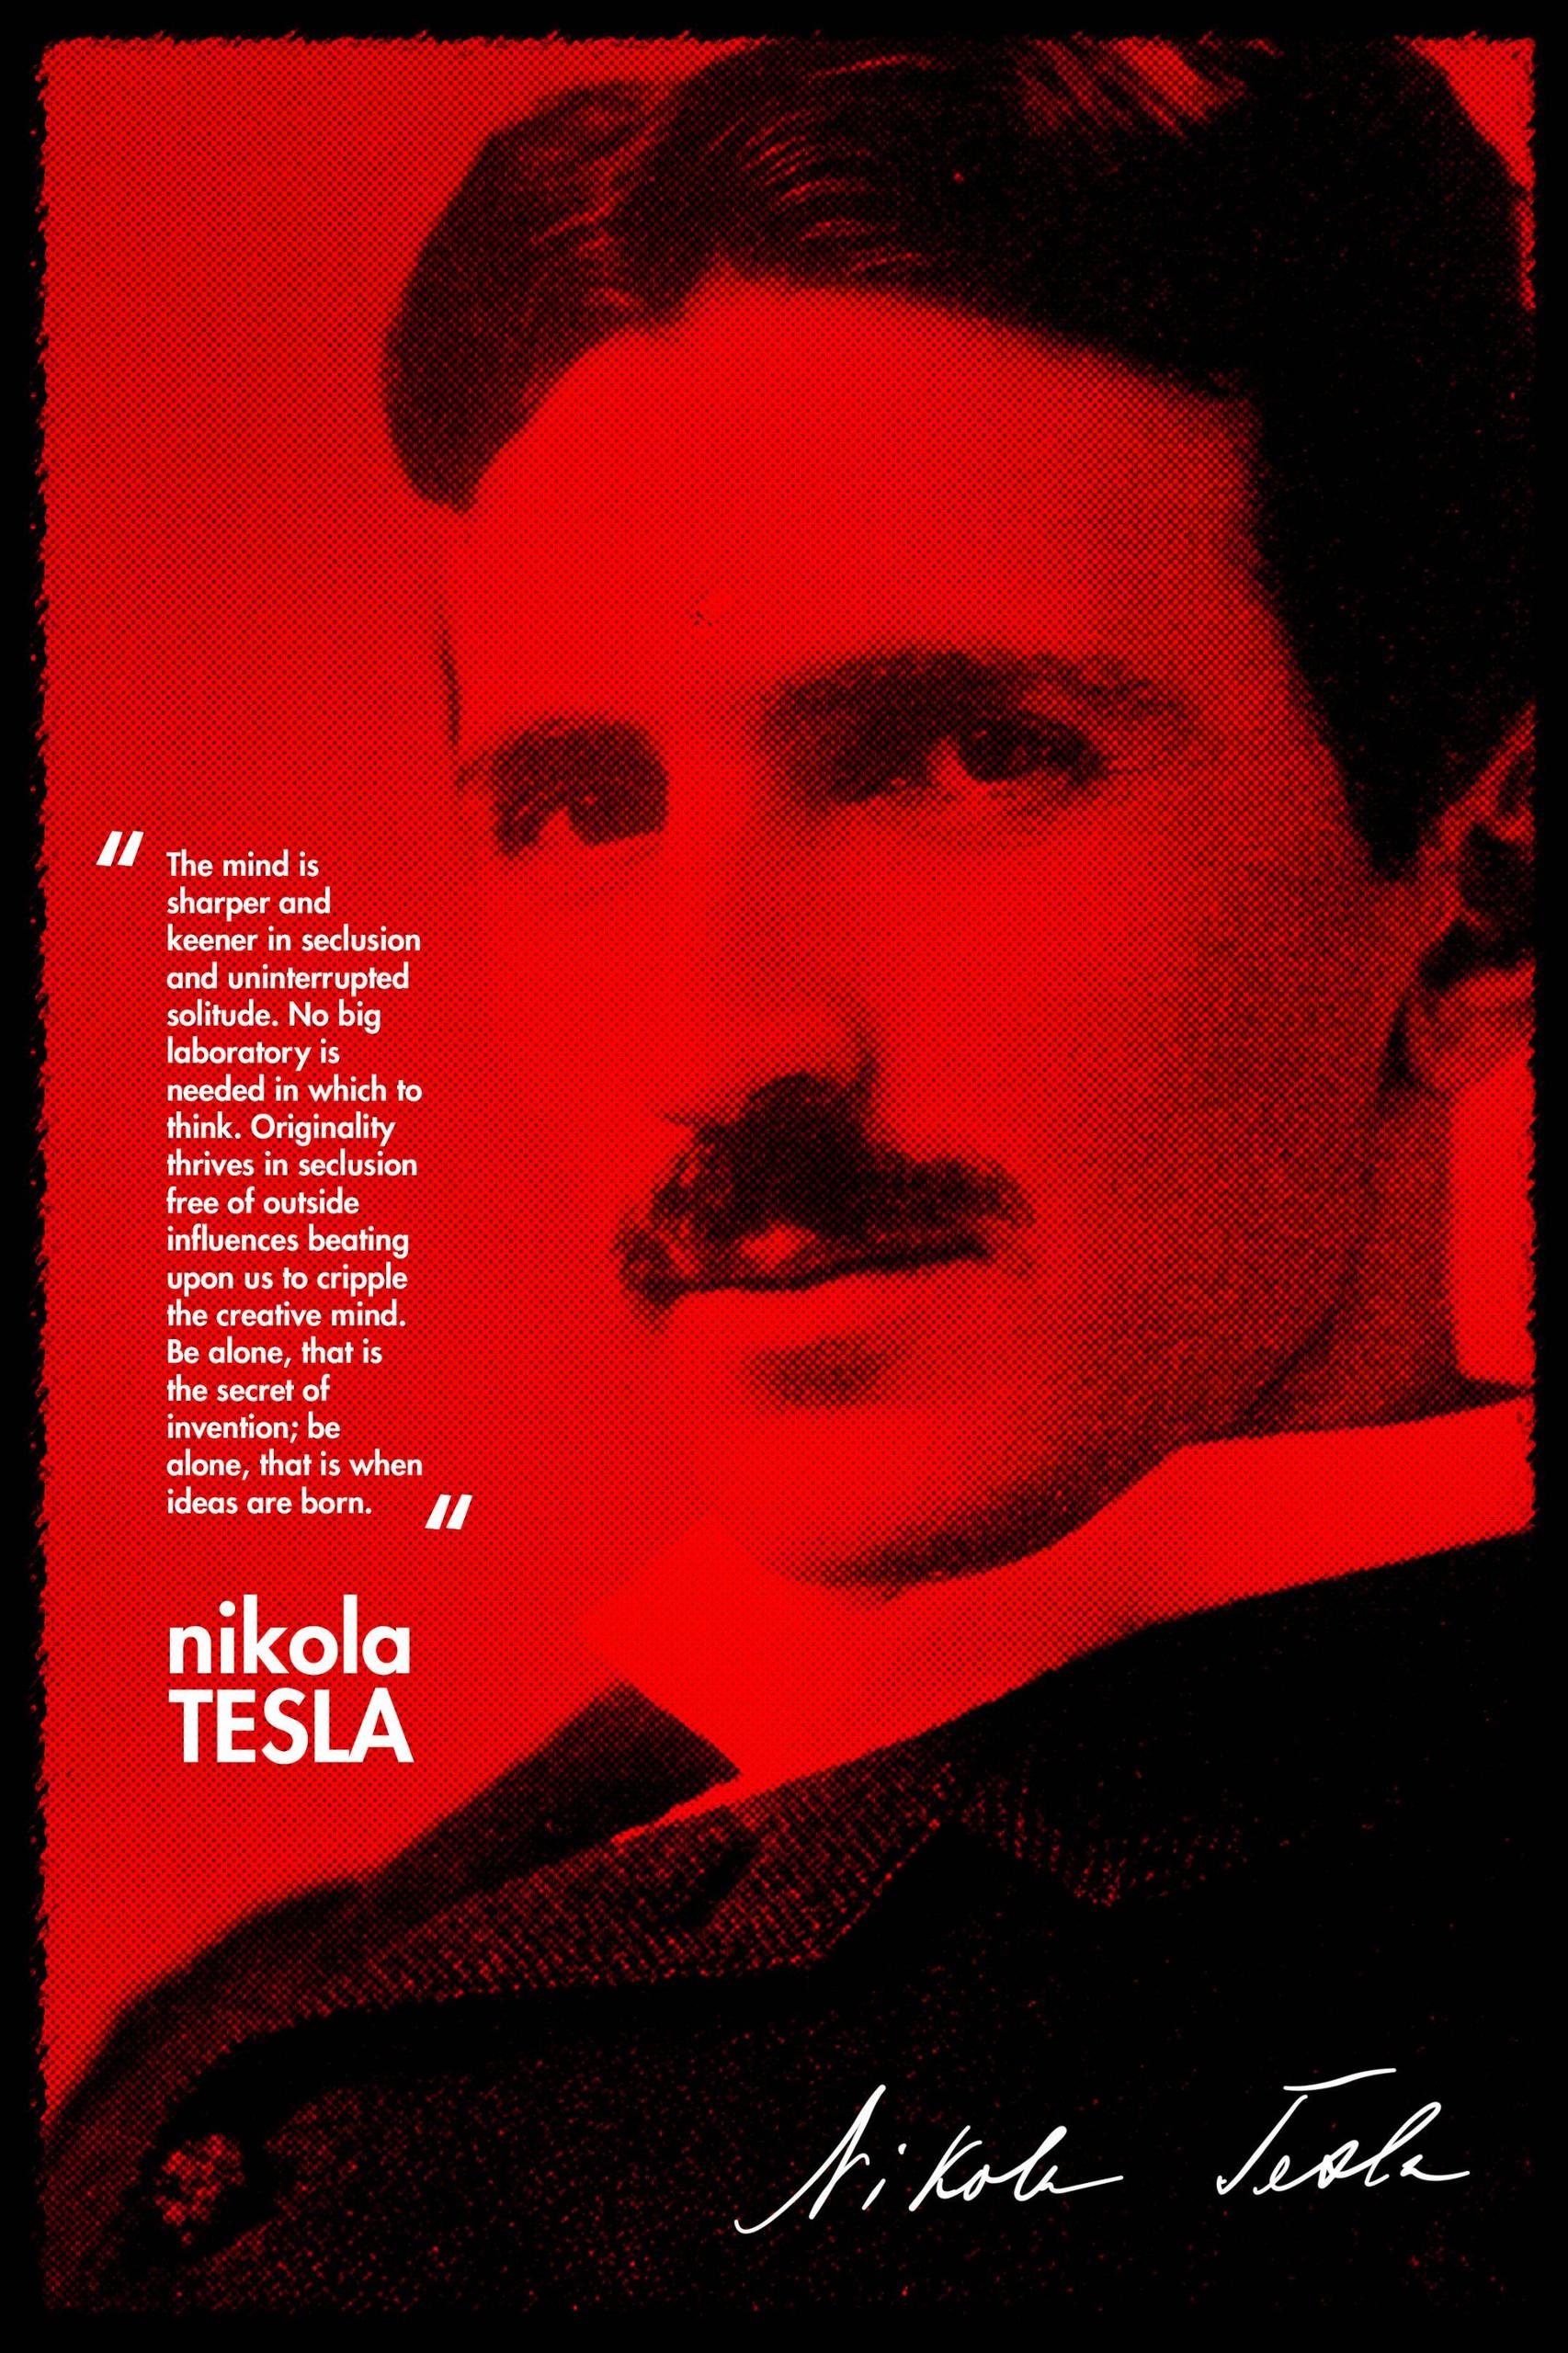 nikola tesla wallpaper hd,poster,red,text,album cover,movie